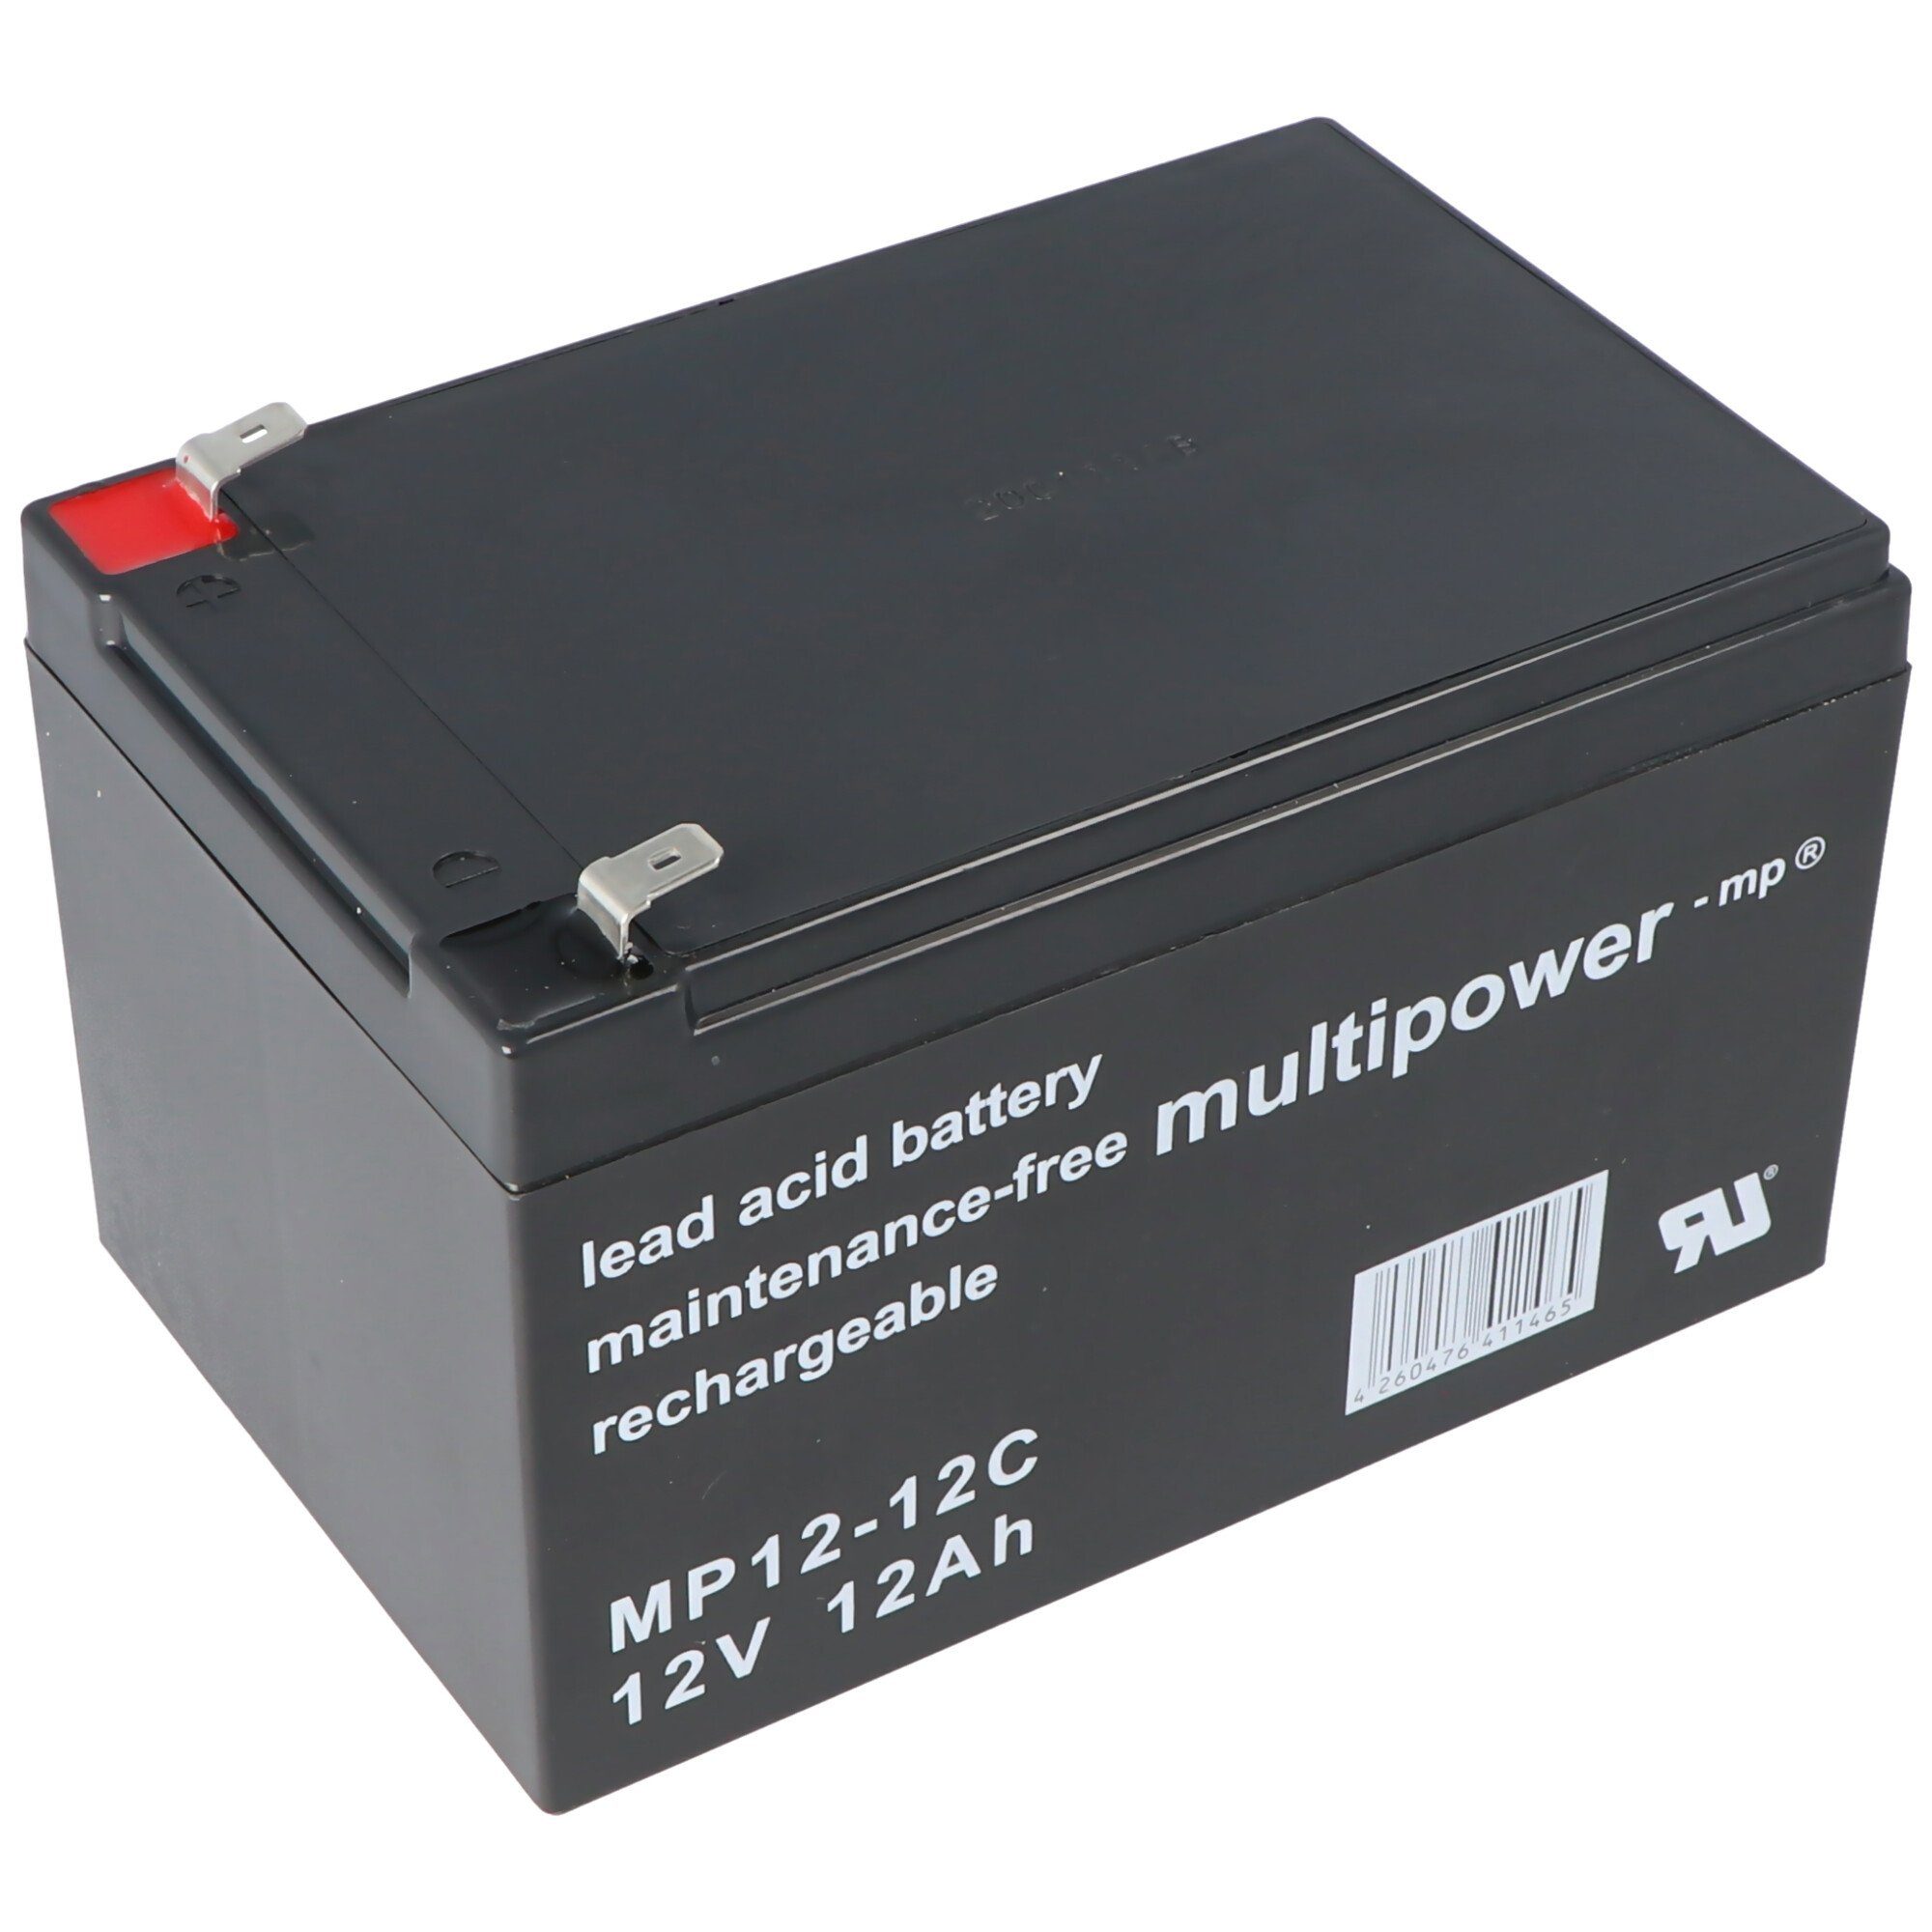 Multipower Multipower MP12-12C Blei Akku Cycle 12 mAh V) 12000 Akku Volt (12,0 Zyklenfest, 12Ah